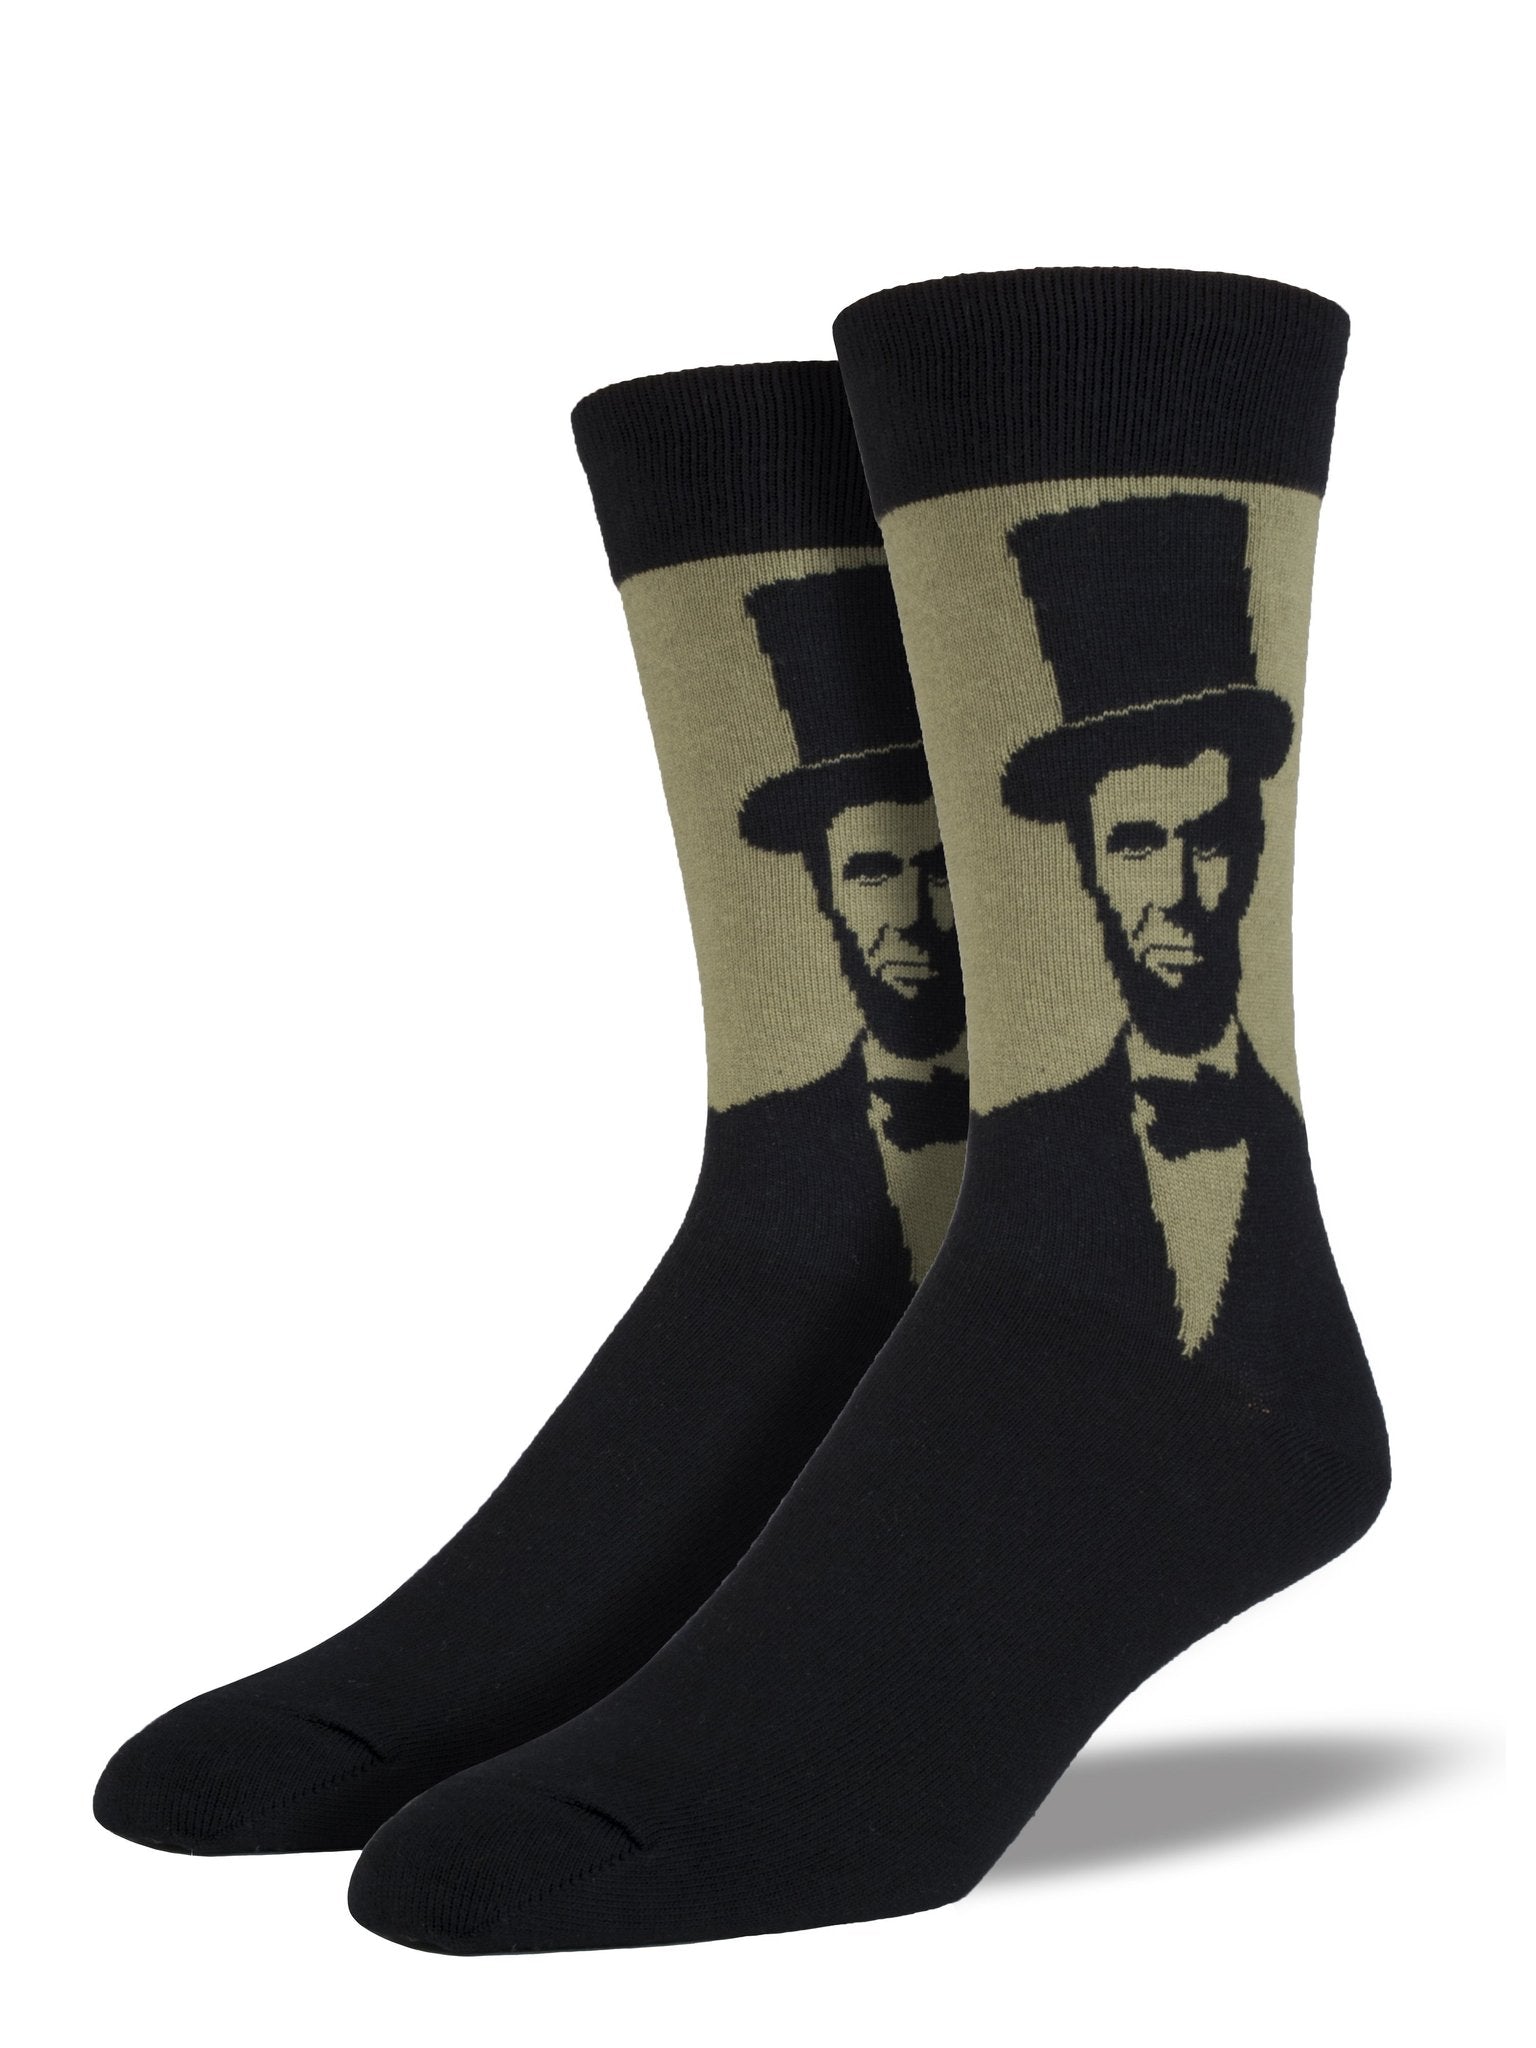 Lincoln Men's Socks